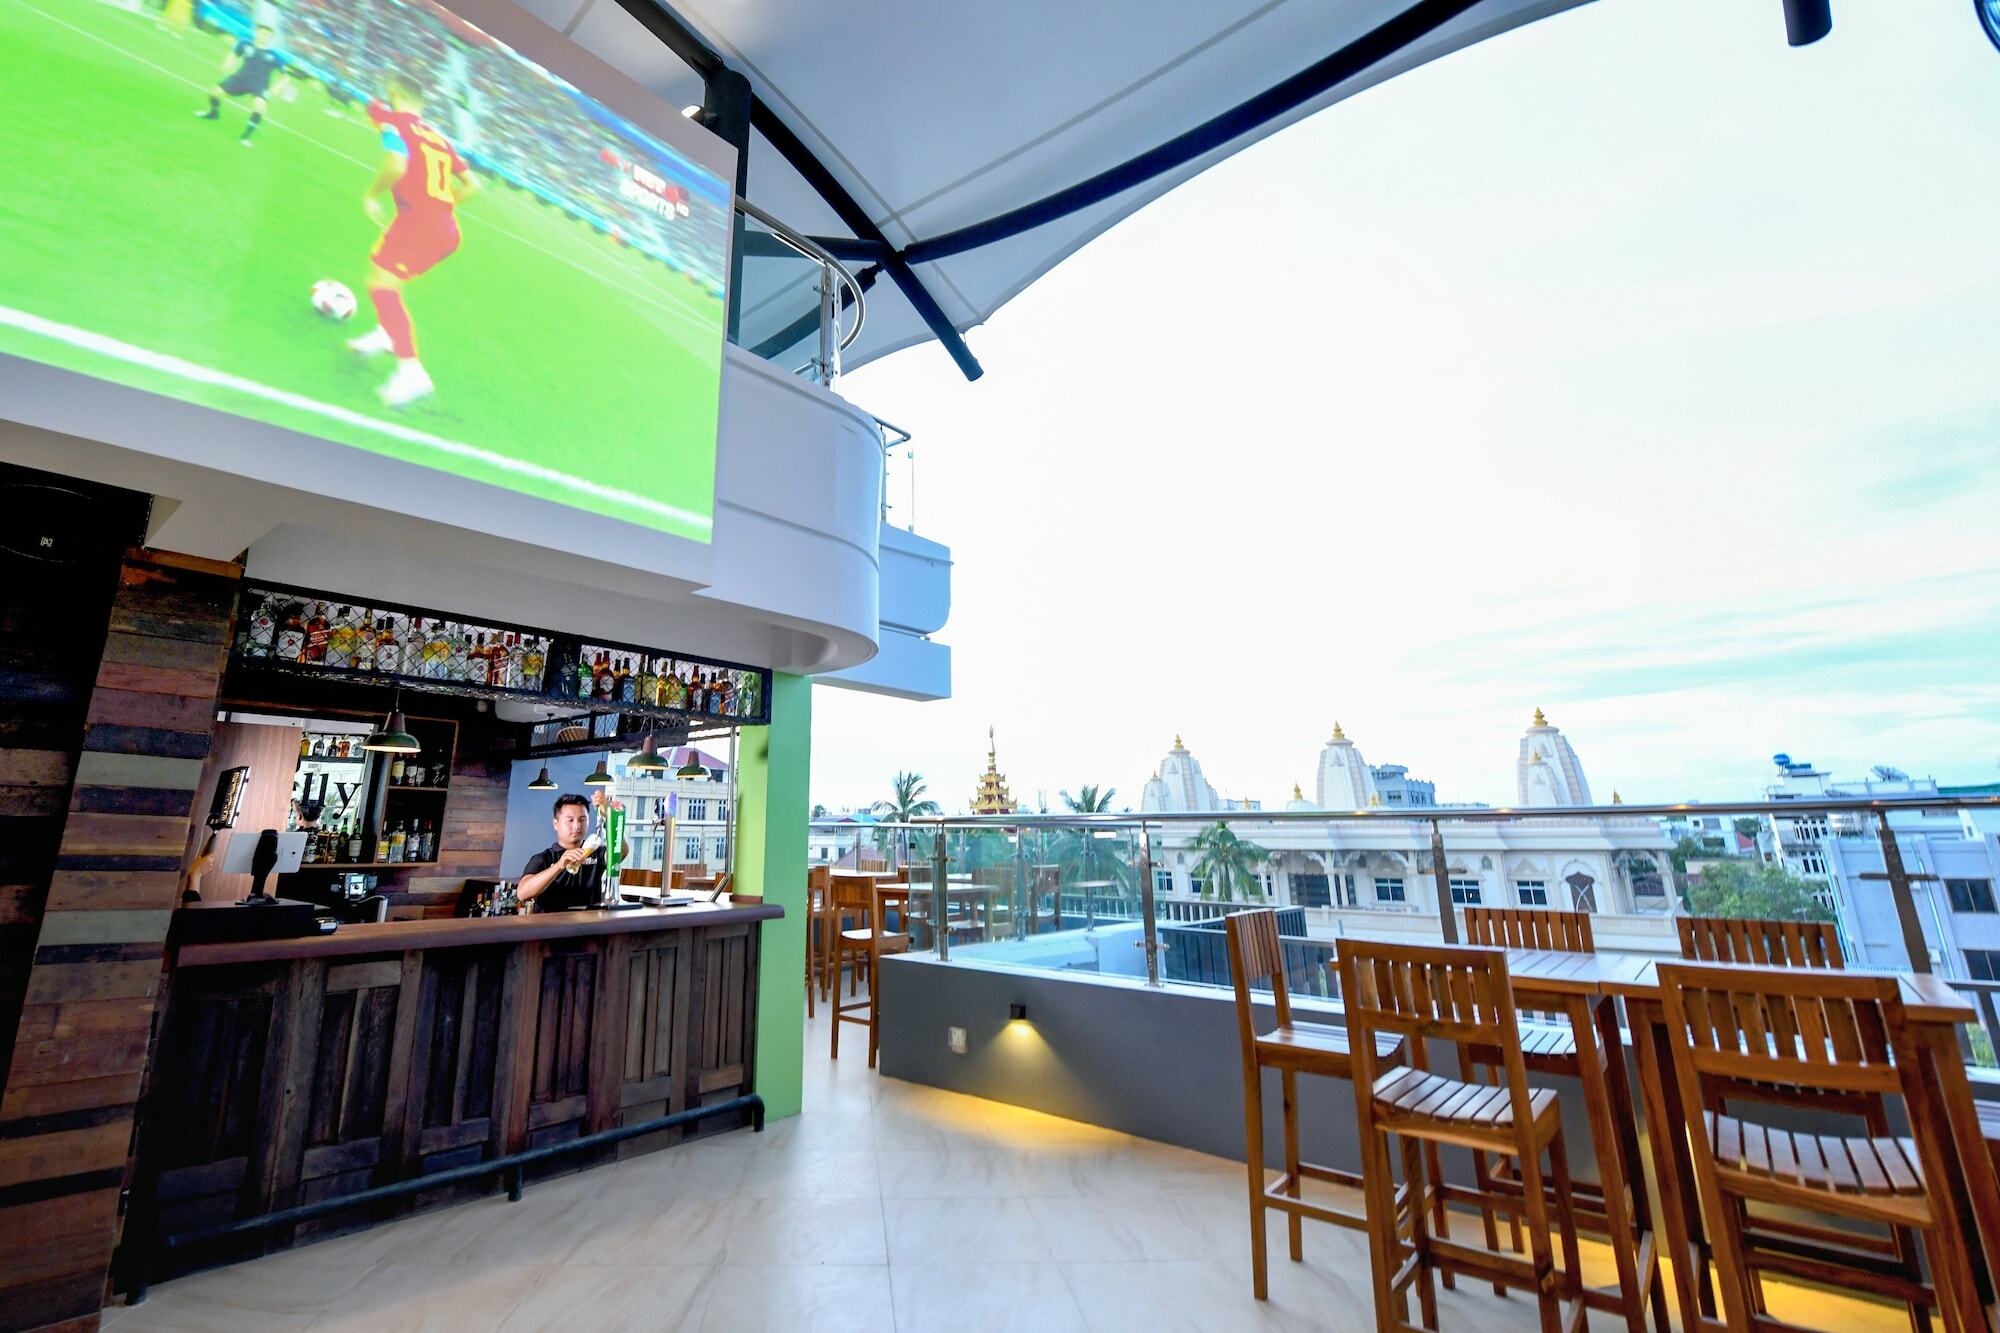 Ned Kelly Hotel & Irish Pub Mandalay Exterior photo